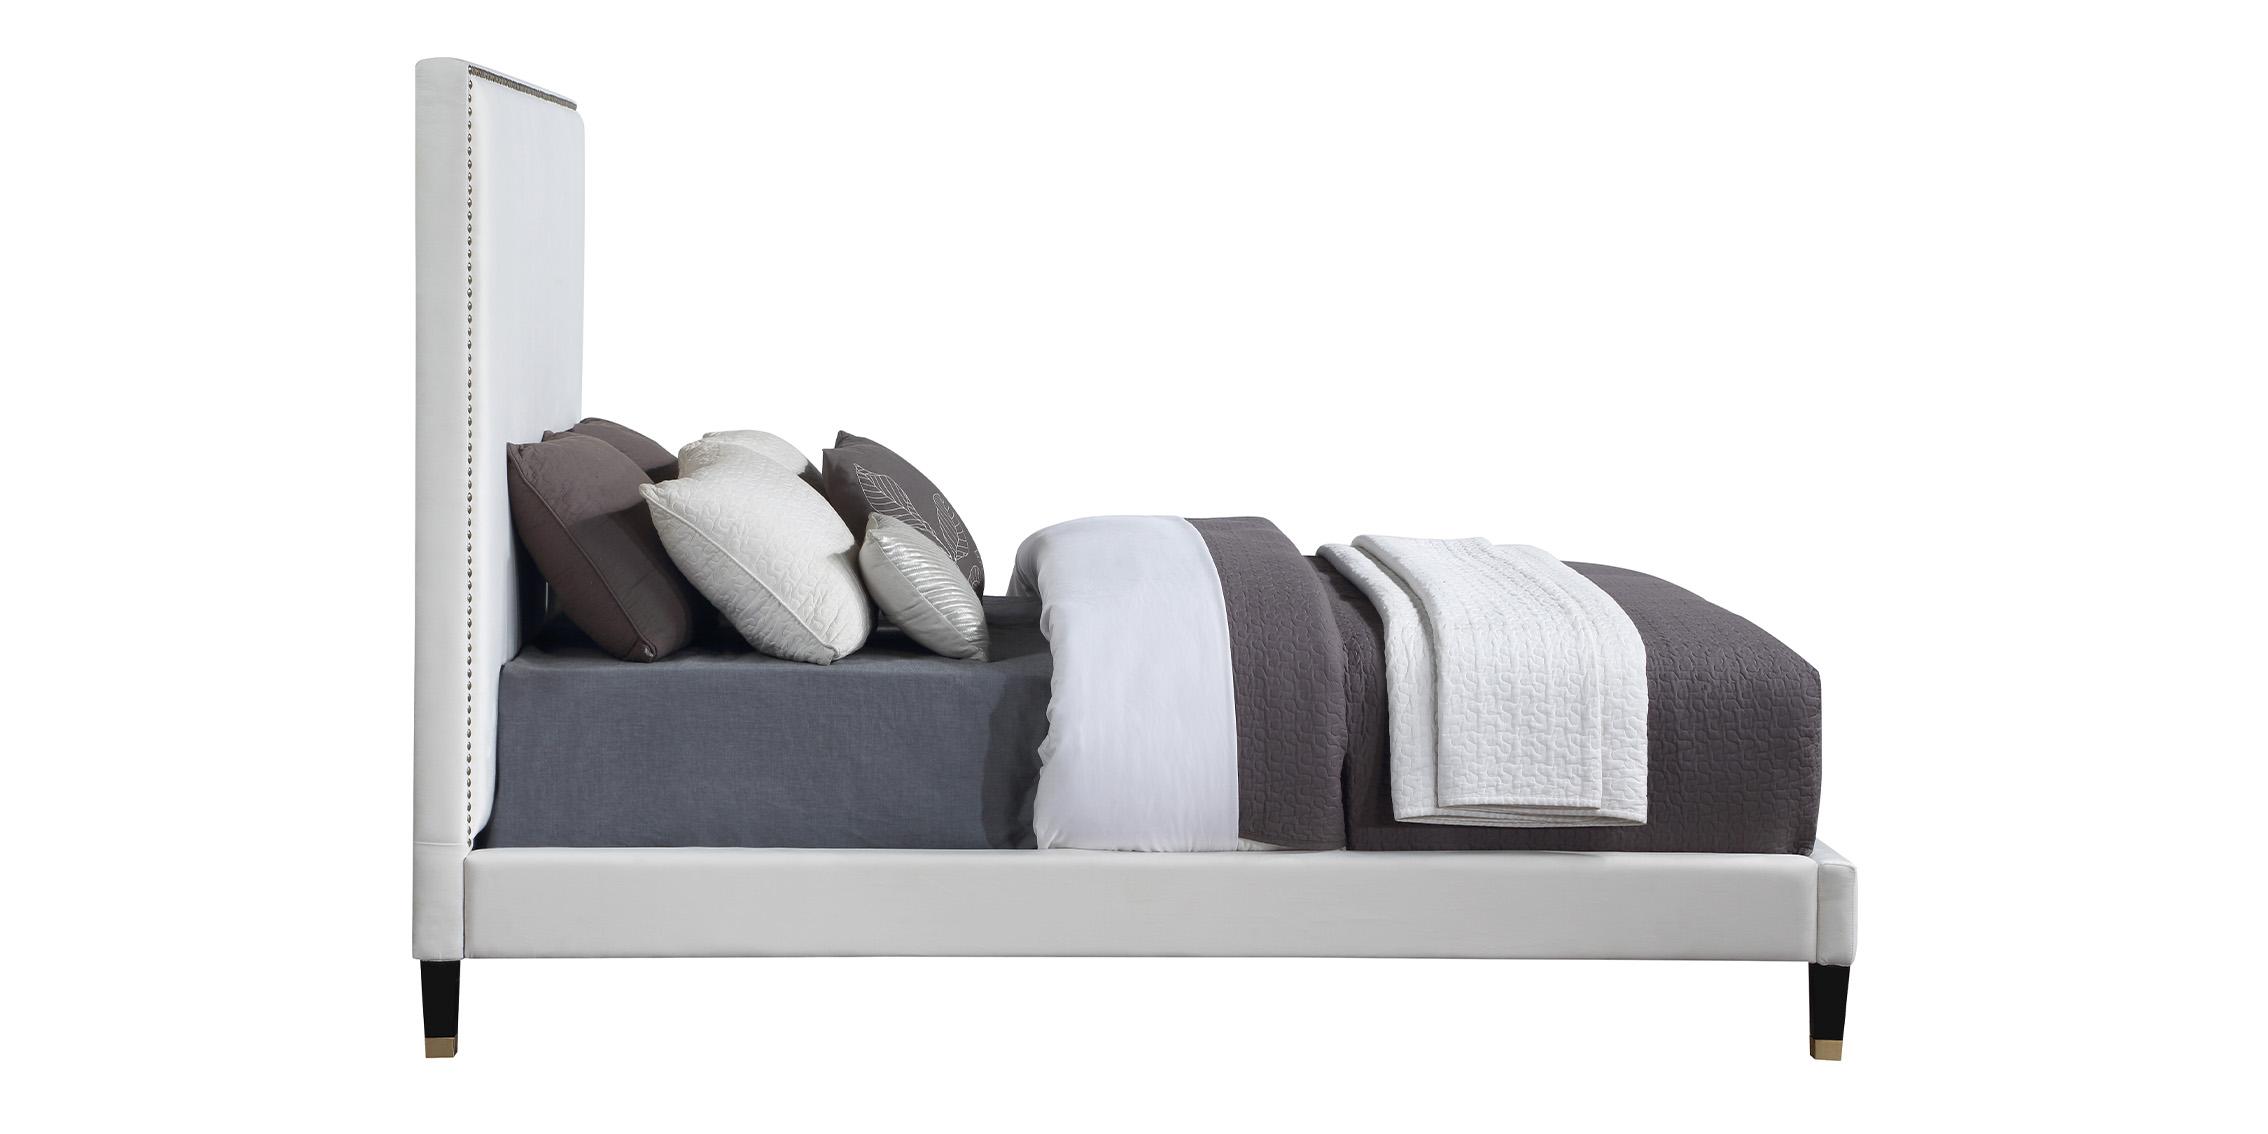 

    
HarlieCream-F Meridian Furniture Platform Bed
